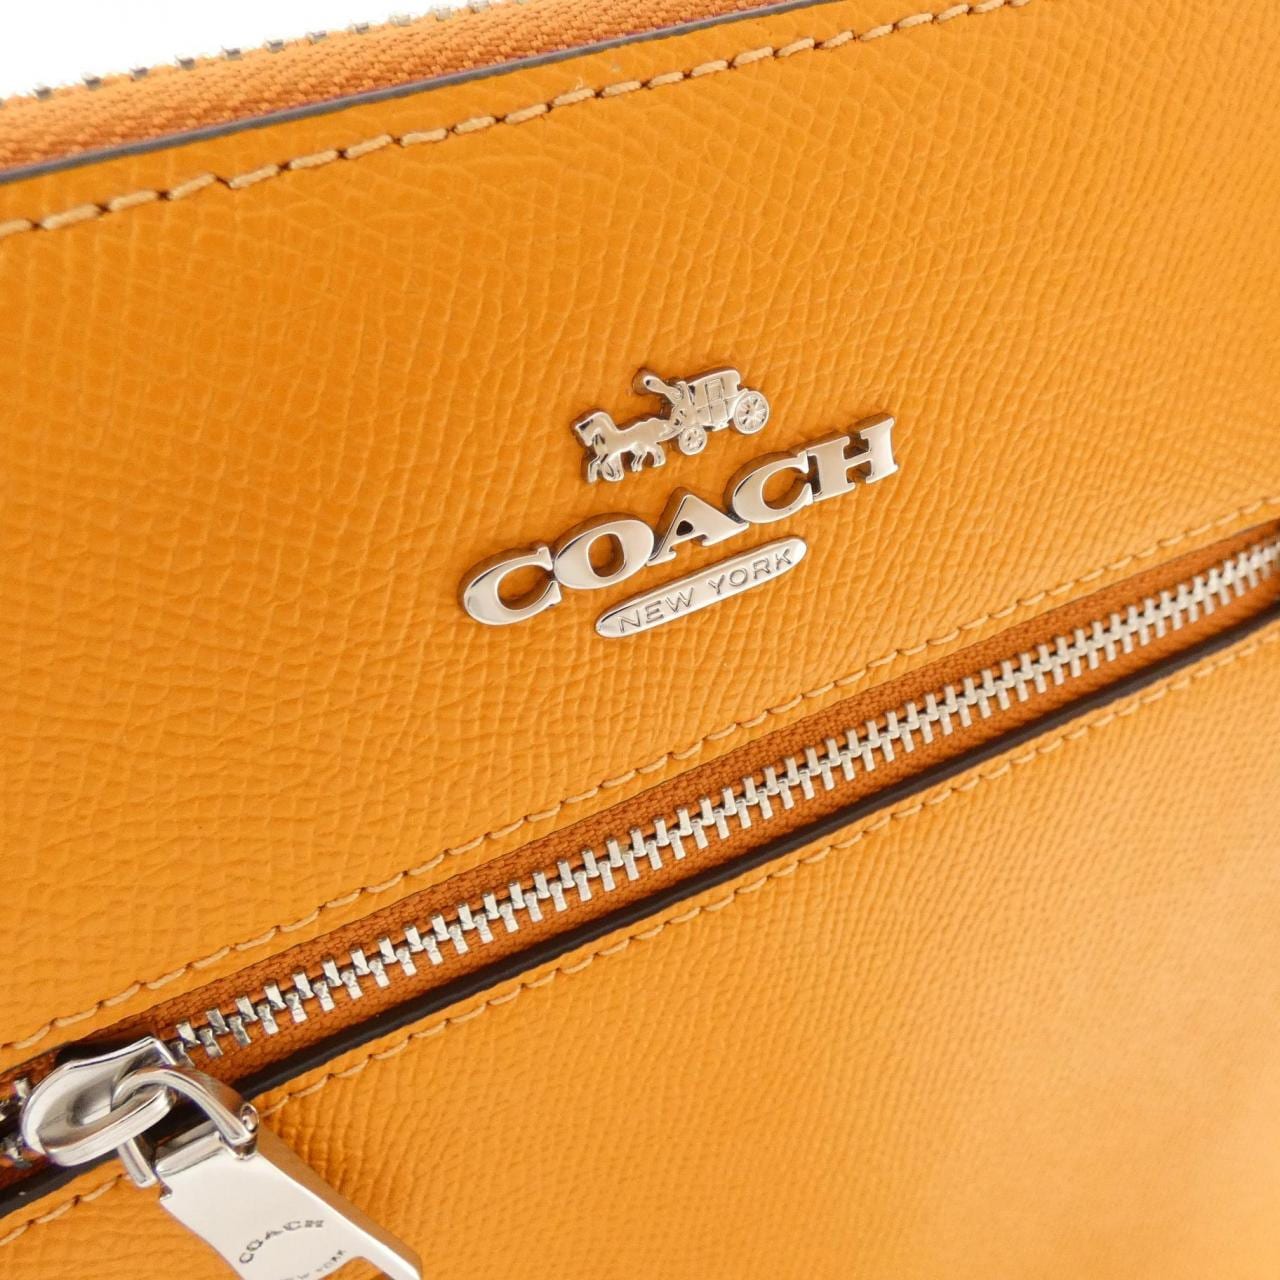 [BRAND NEW] Coach CE871 Shoulder Bag